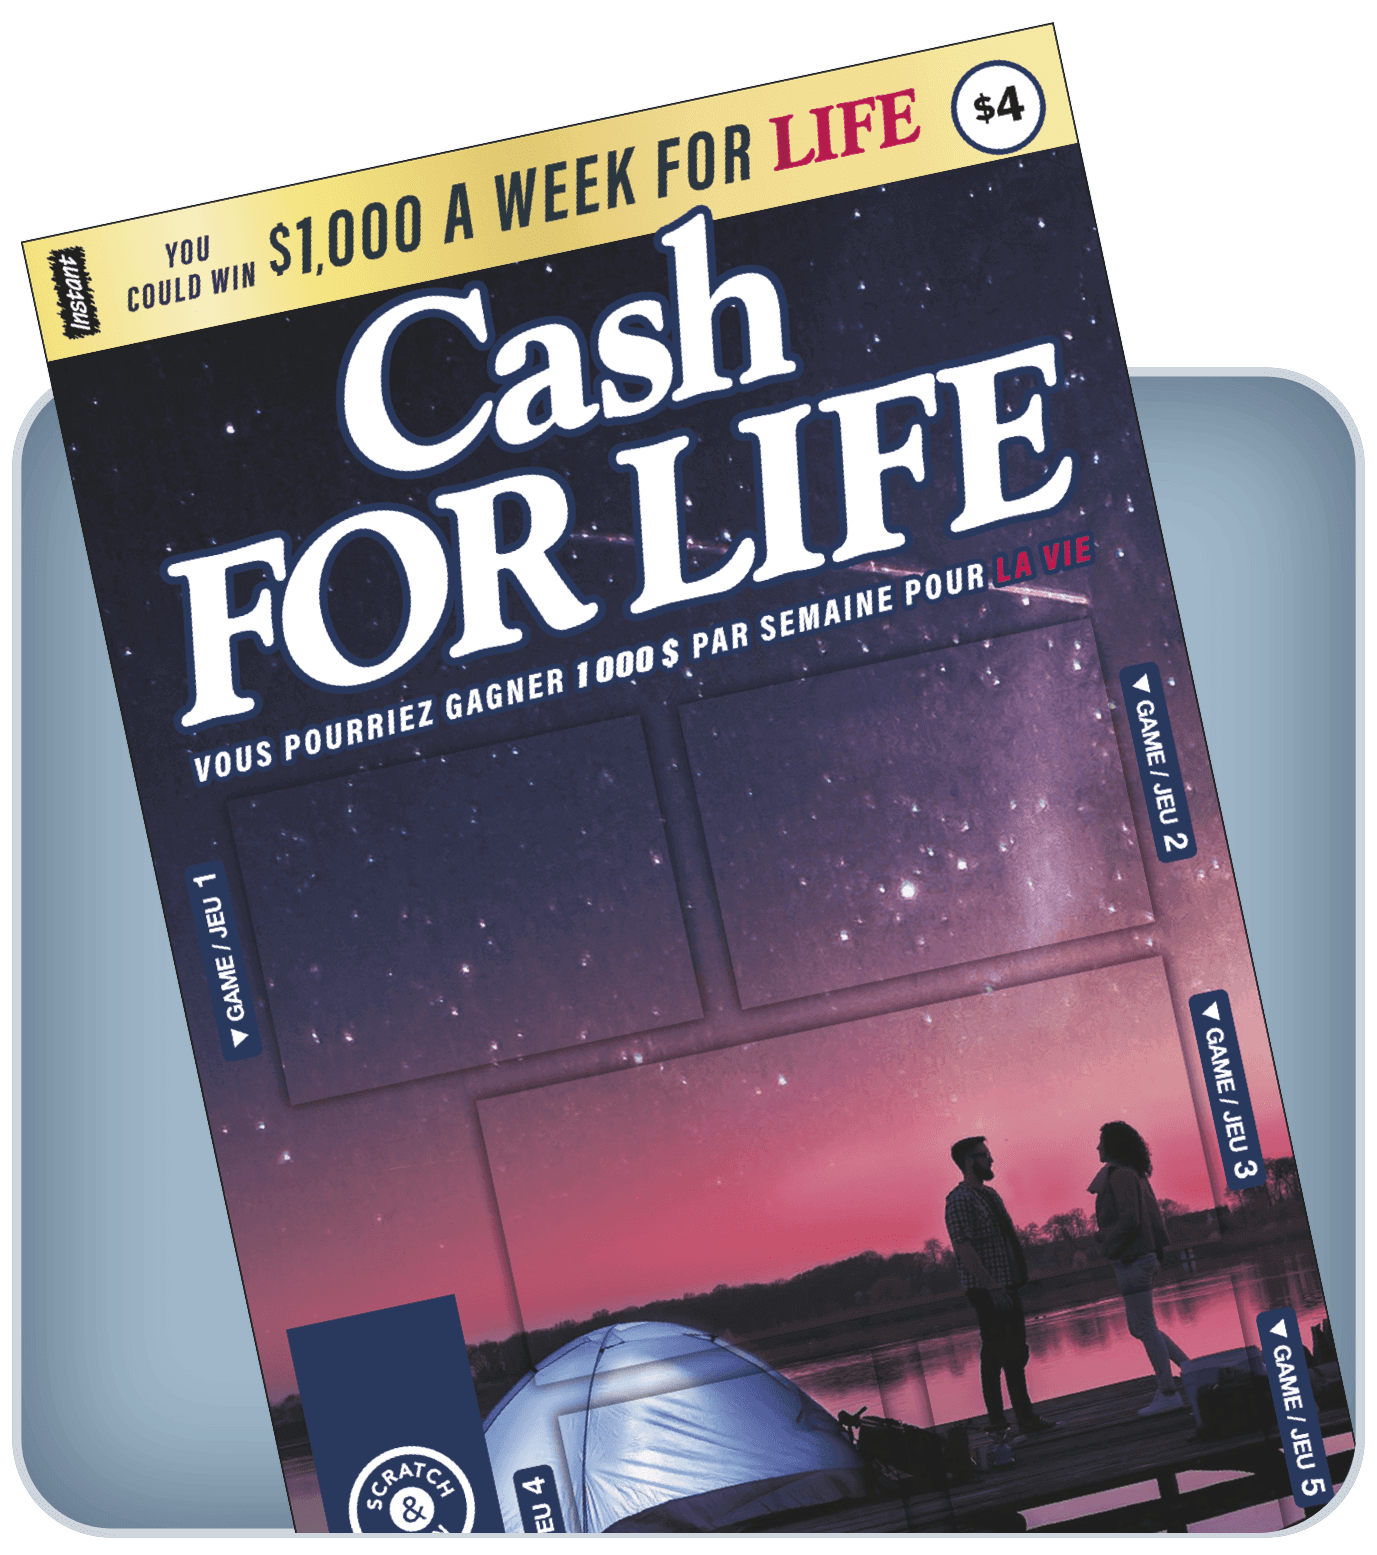 OLG CASH FOR LIFE - CashForLife